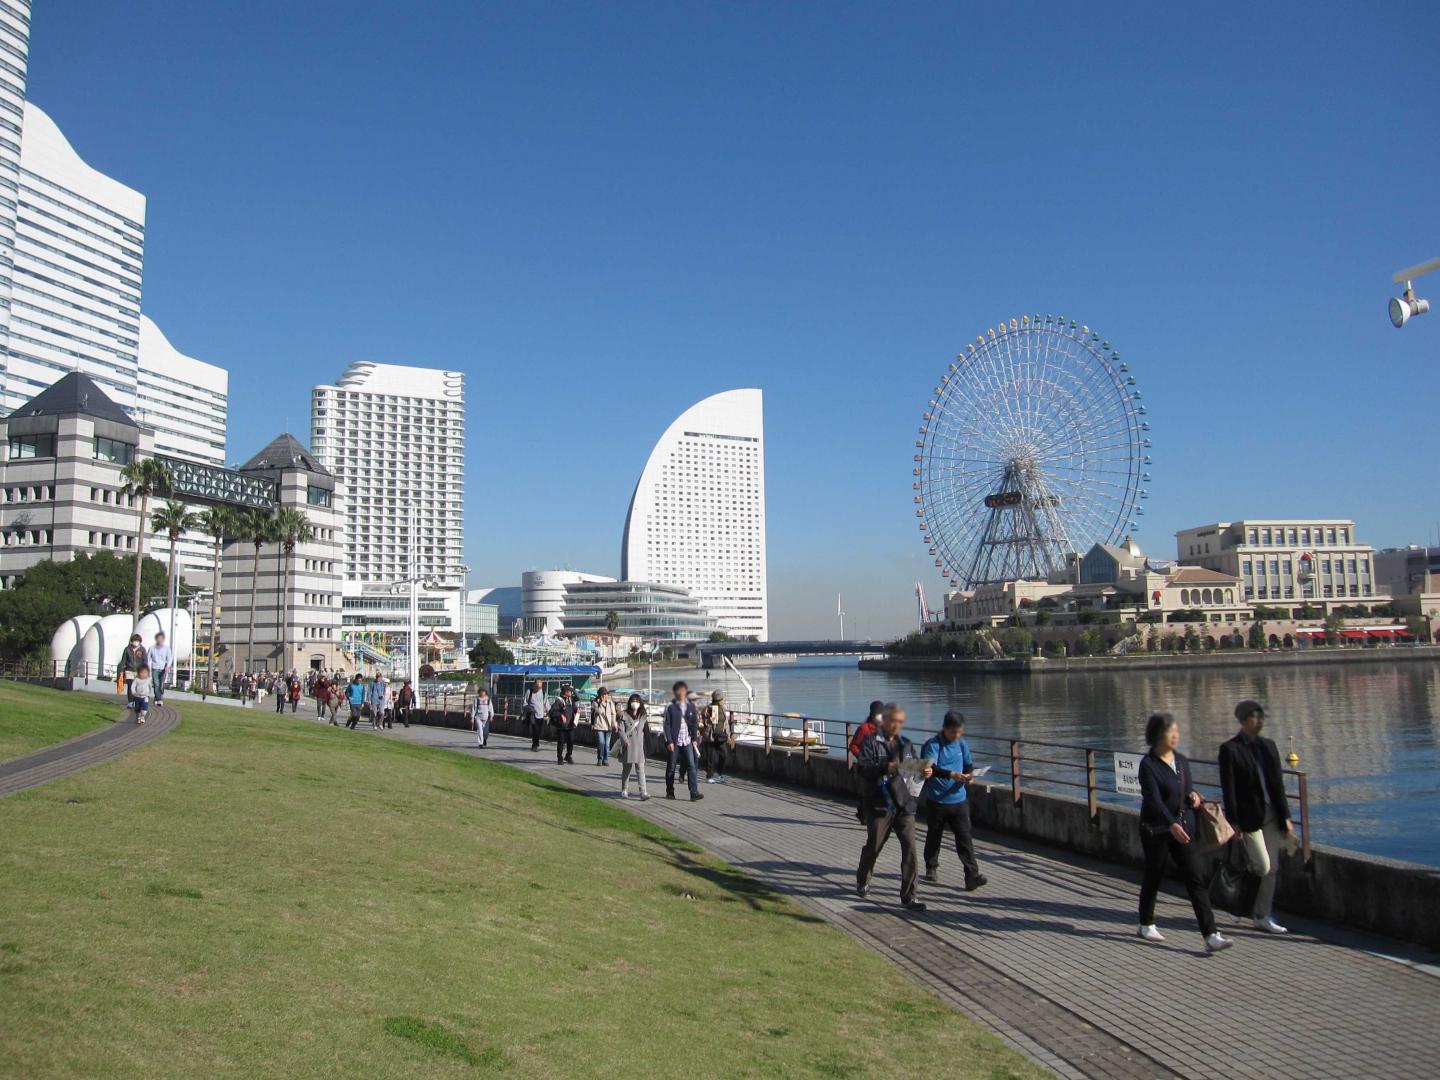 Yokohama, Site of the Current Study